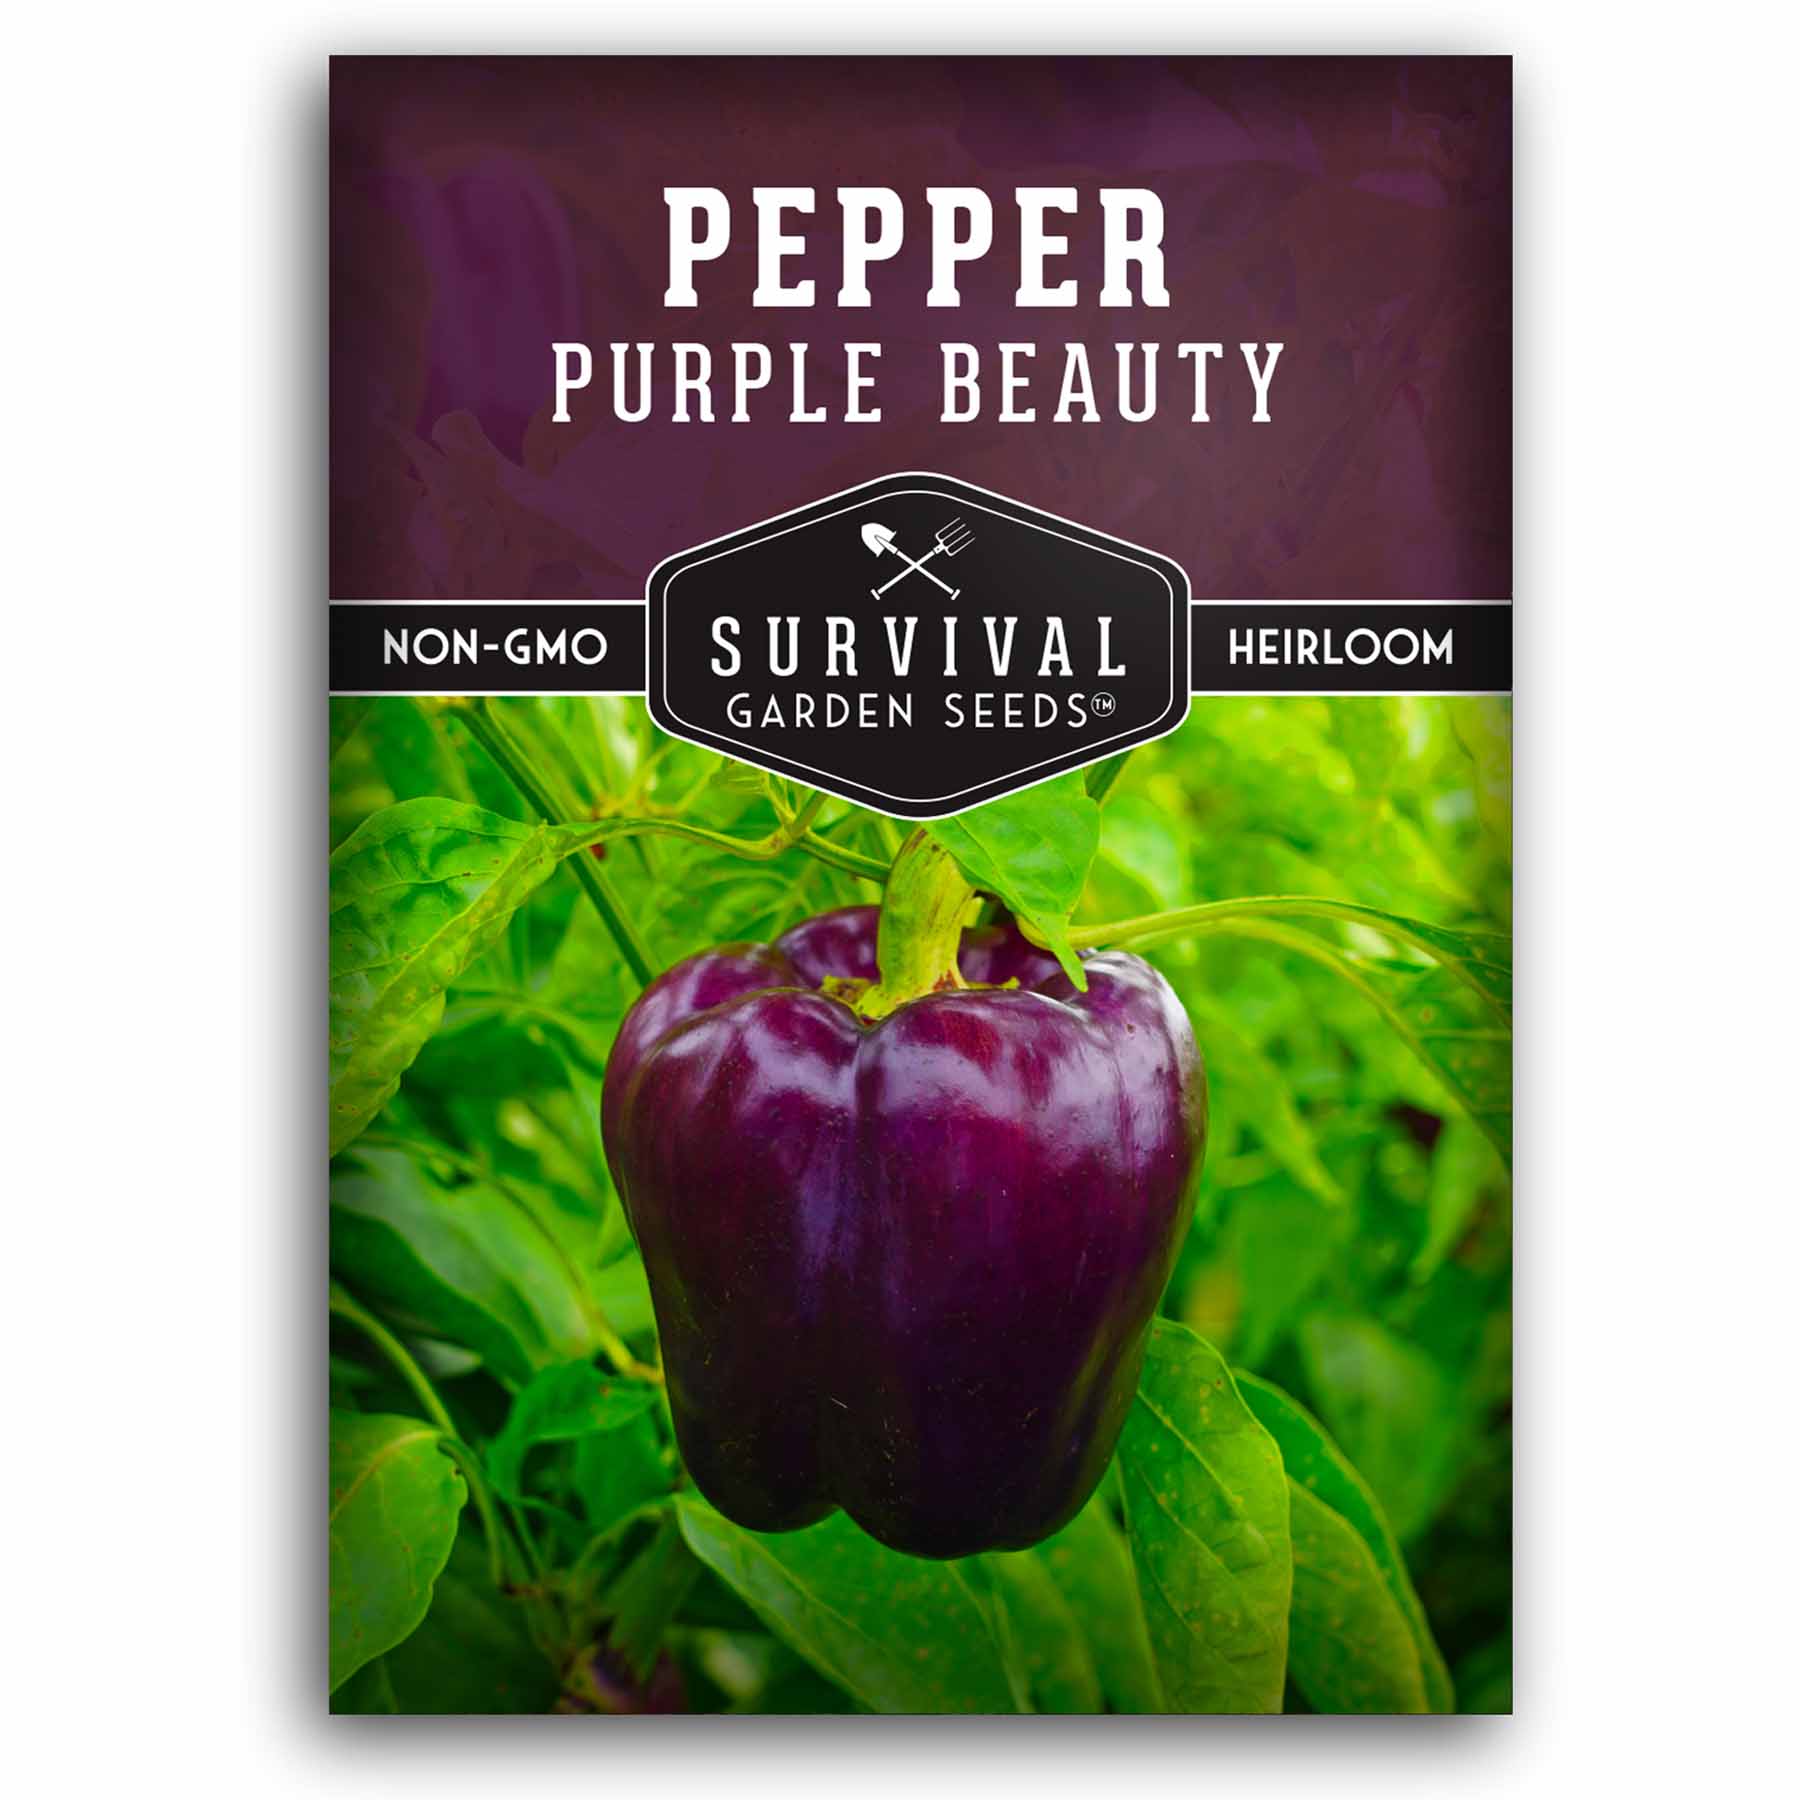 1 packet of Purple Beauty Pepper seeds